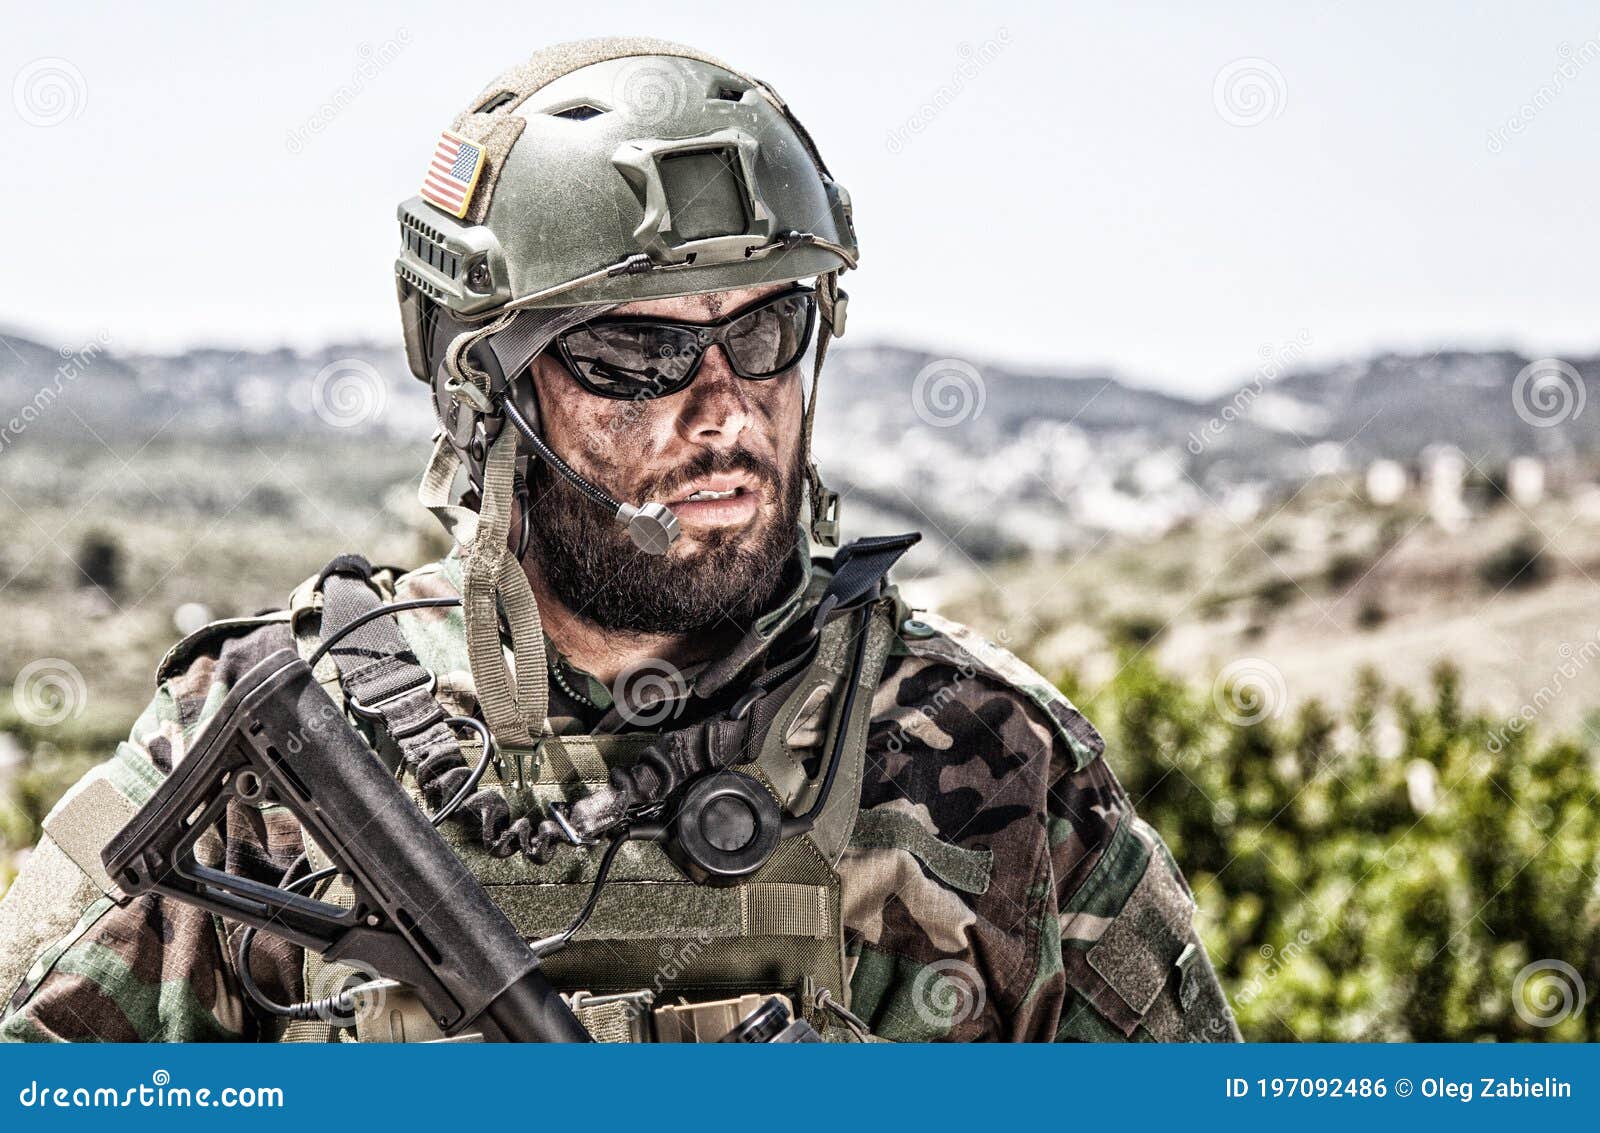 army soldier, modern combatant shoulder portrait